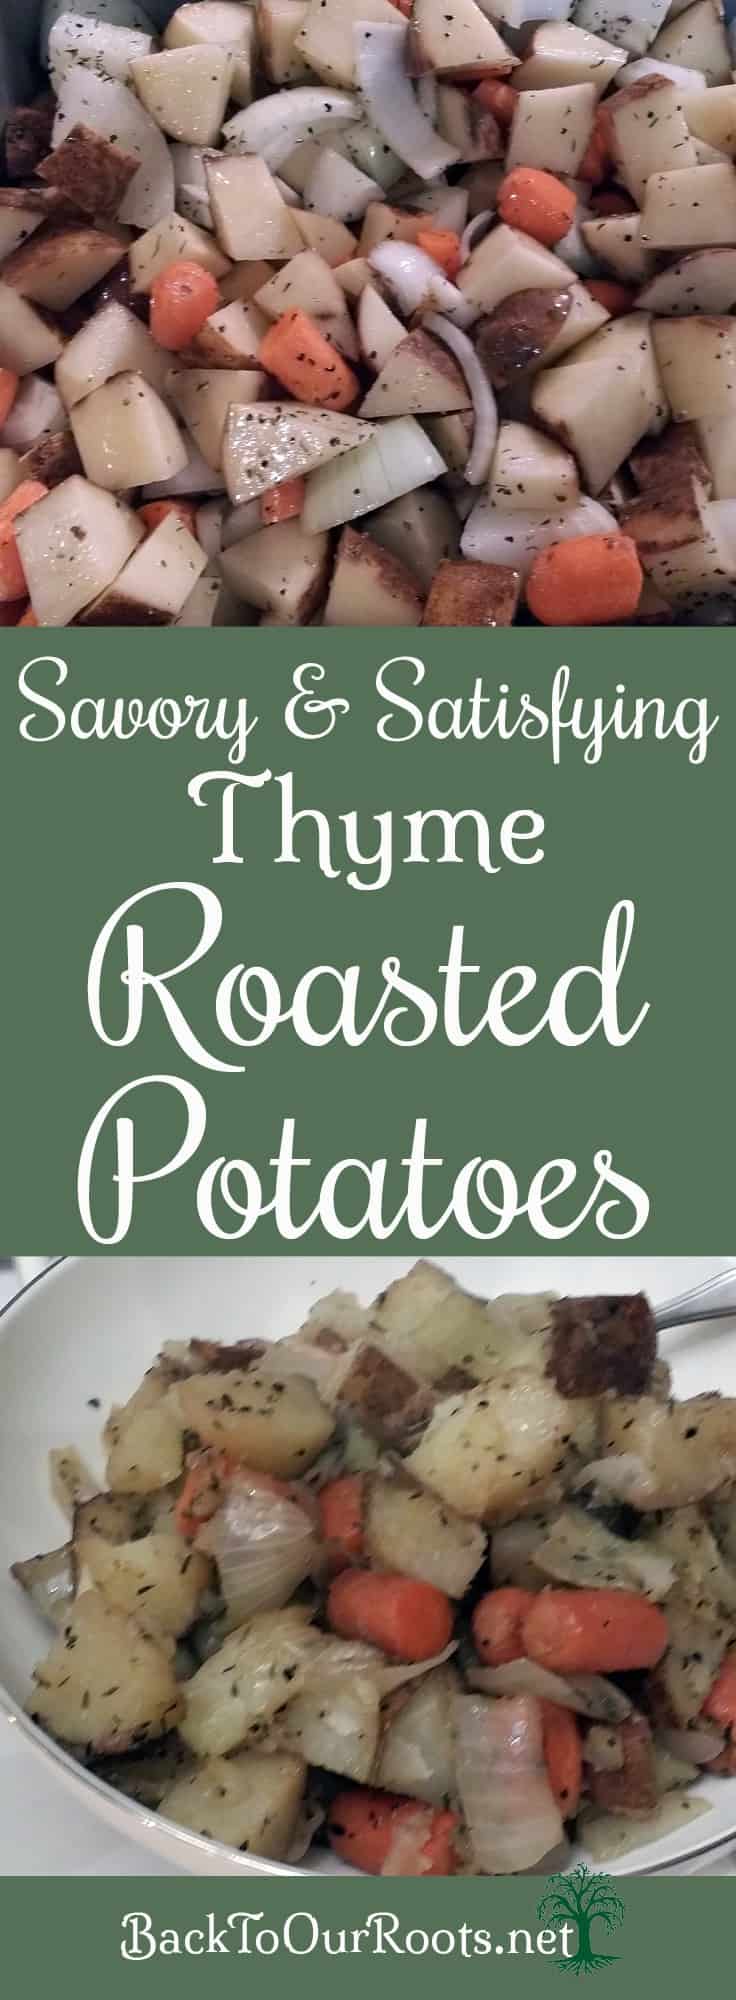 Savory & Satisfying Thyme Roasted Potatoes